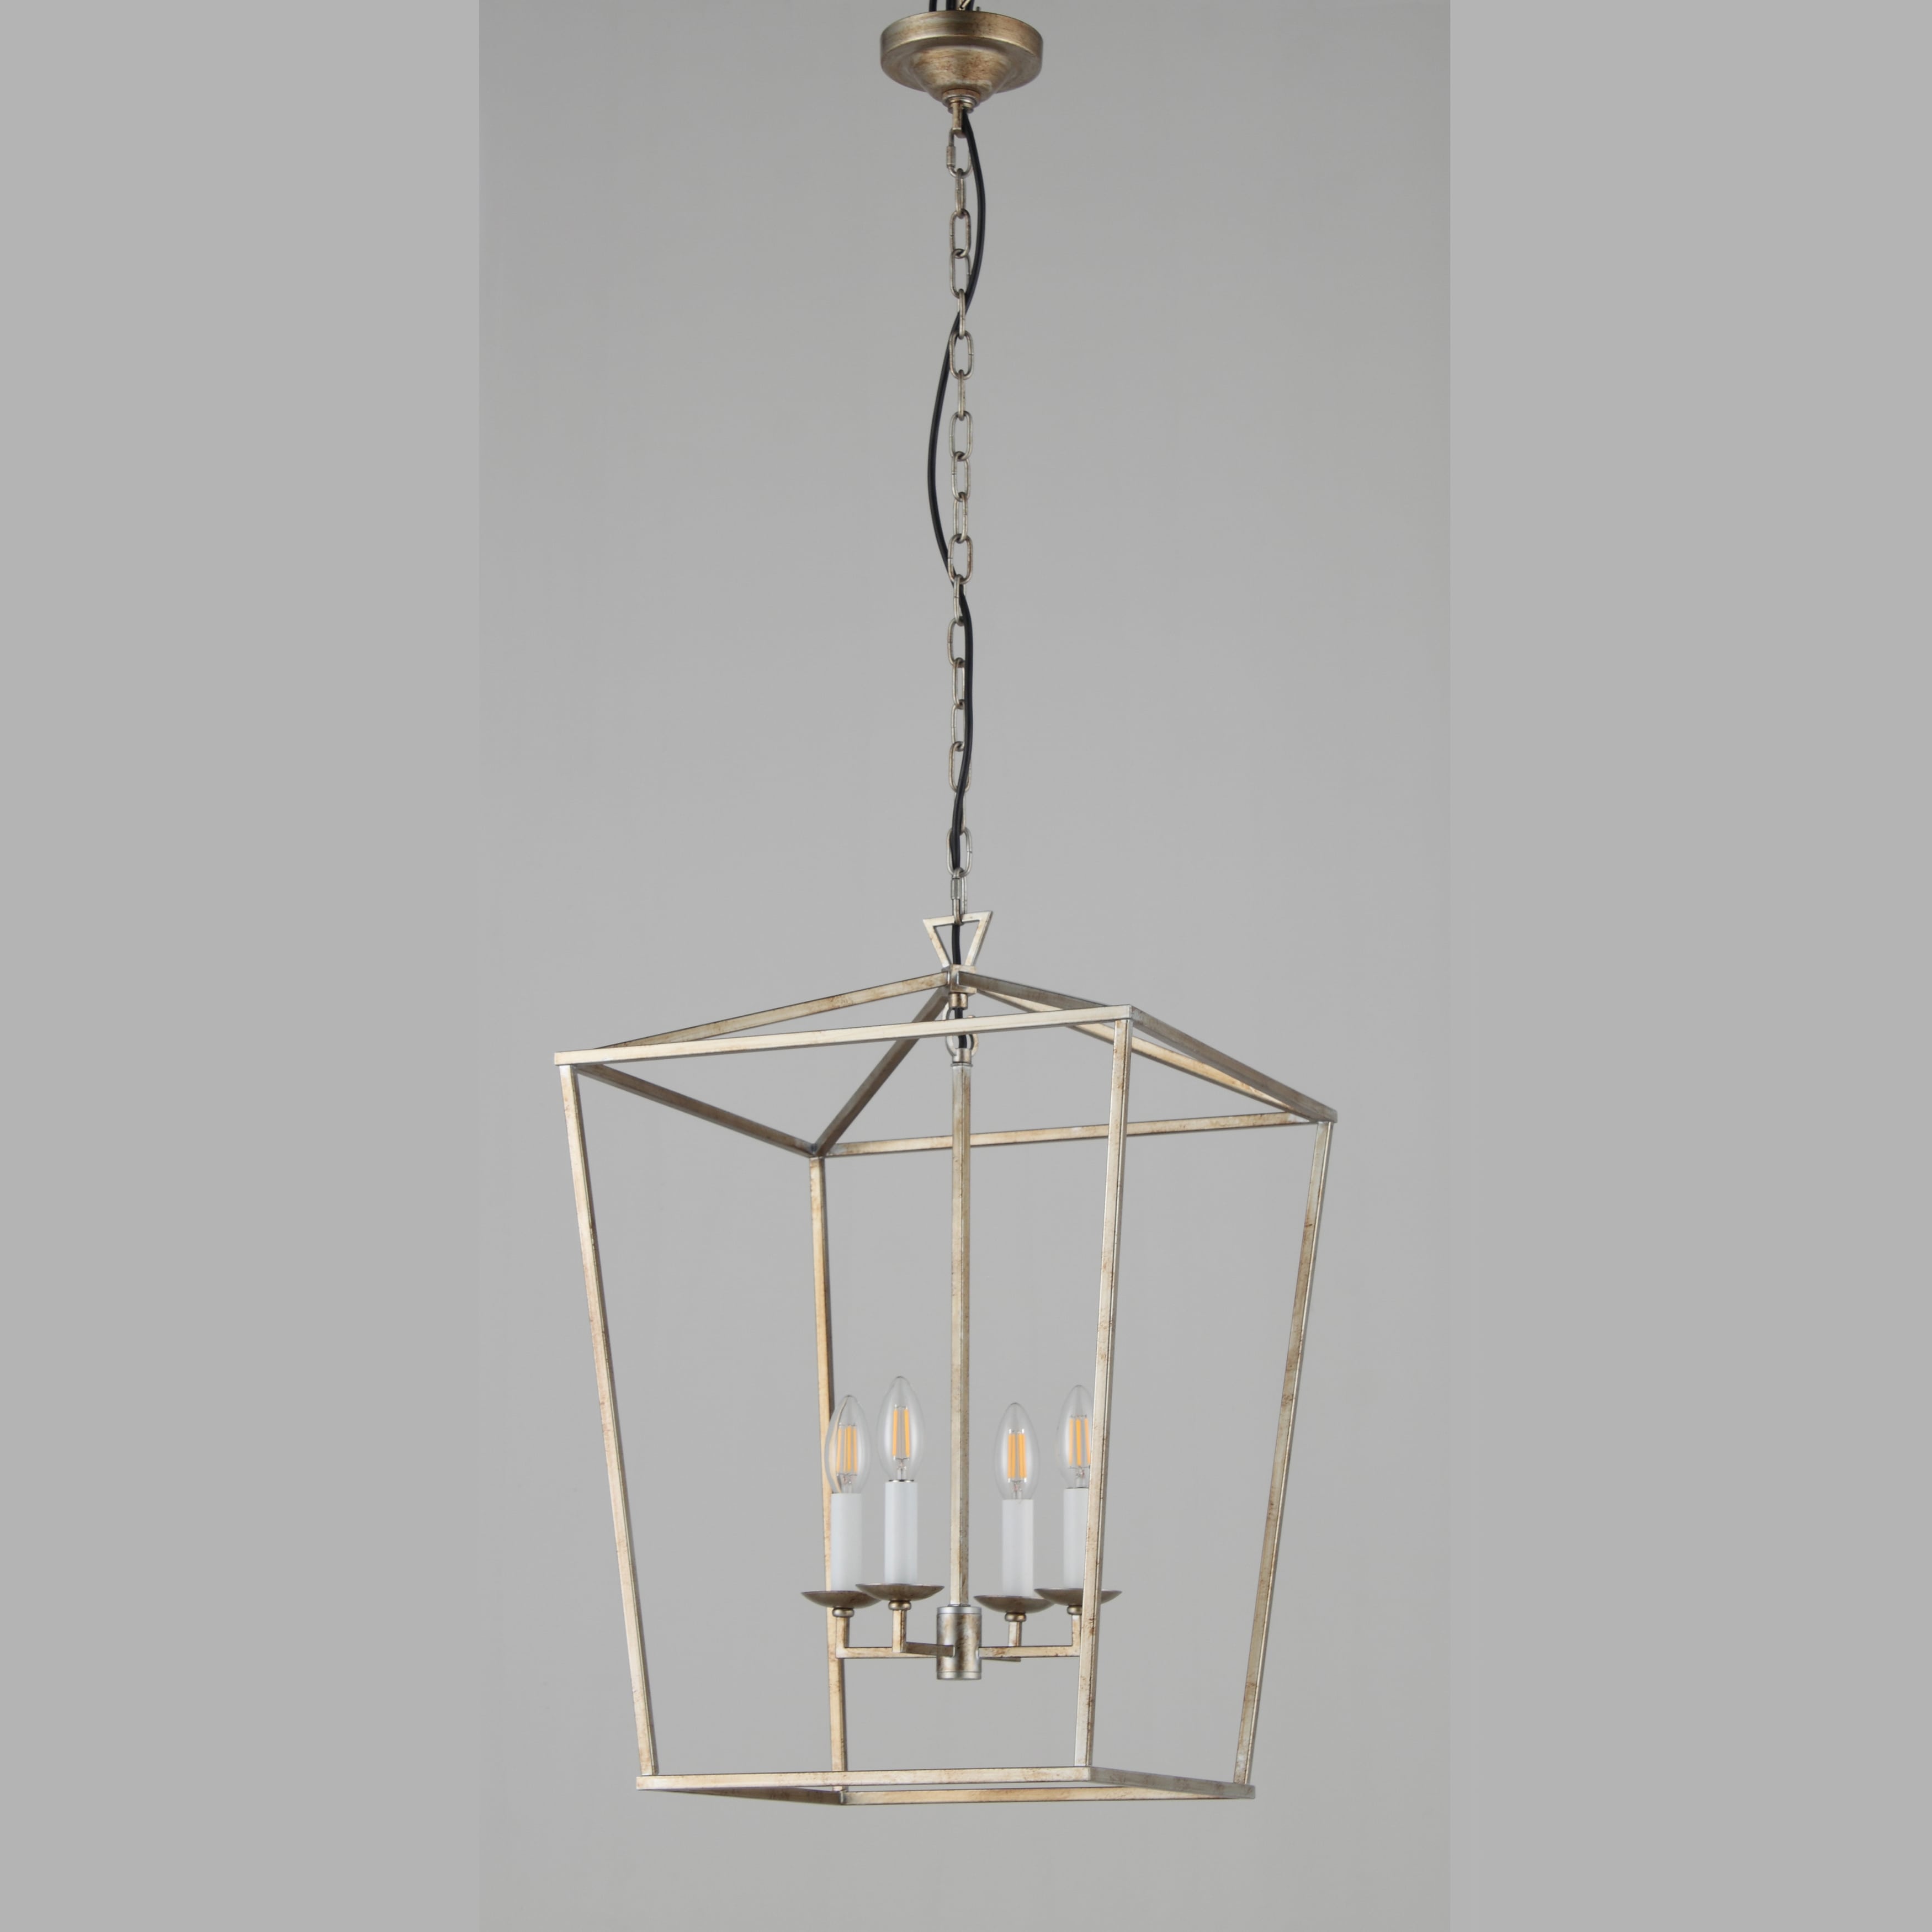 Chris Graff 4 - Light 12"W Lantern Geometric Chandelier - Italian Concept - 